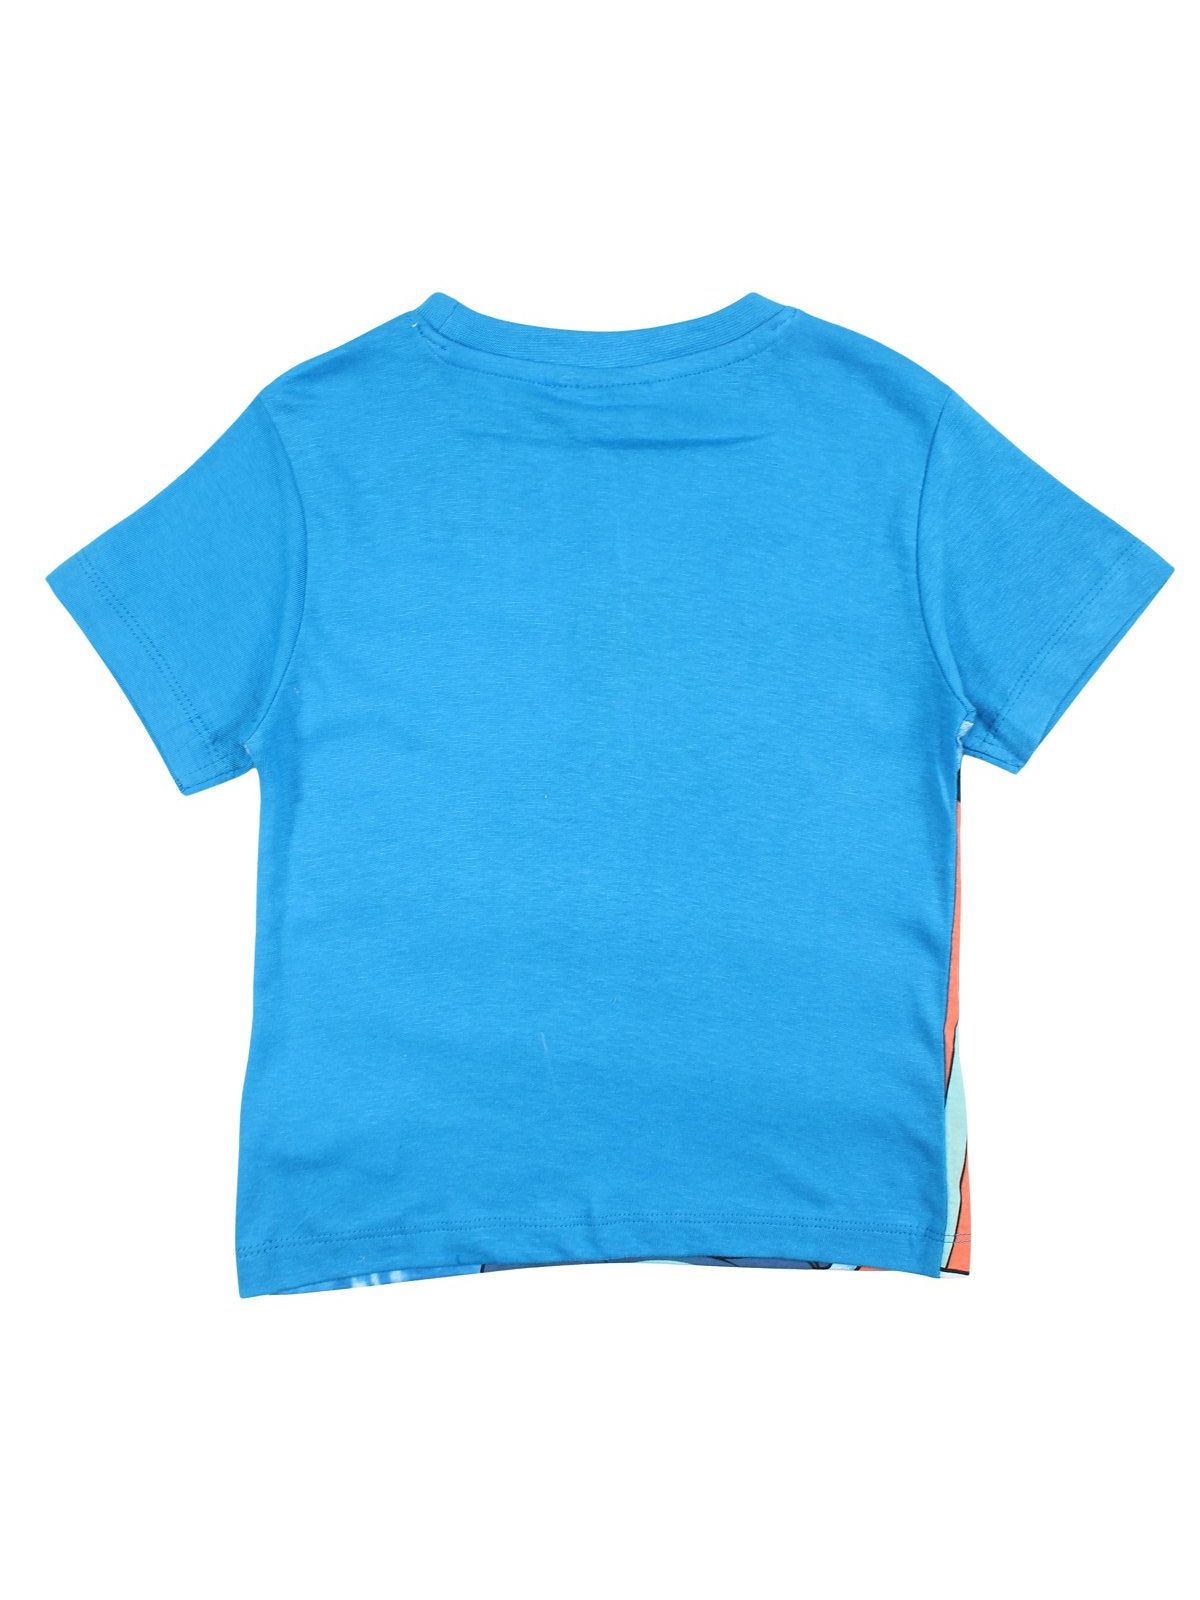 T-shirt lilo & stitch.